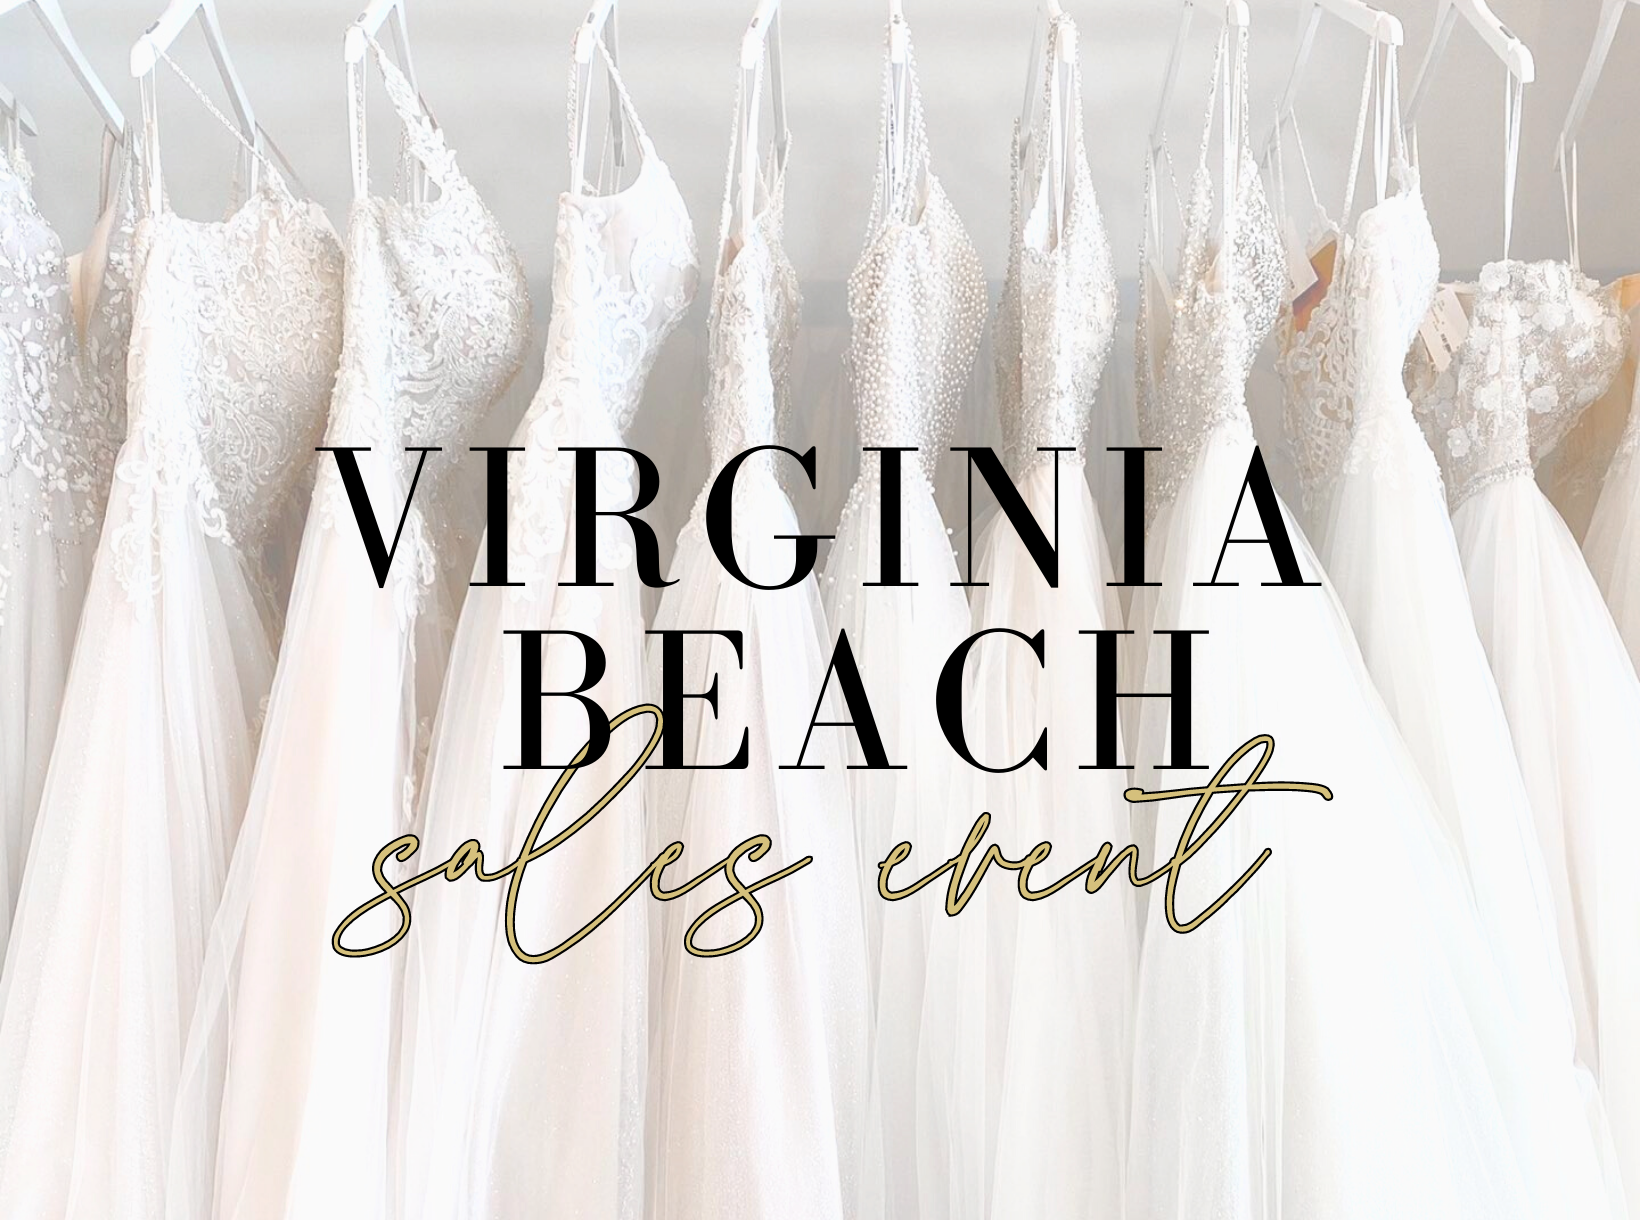 Virginia Beach location